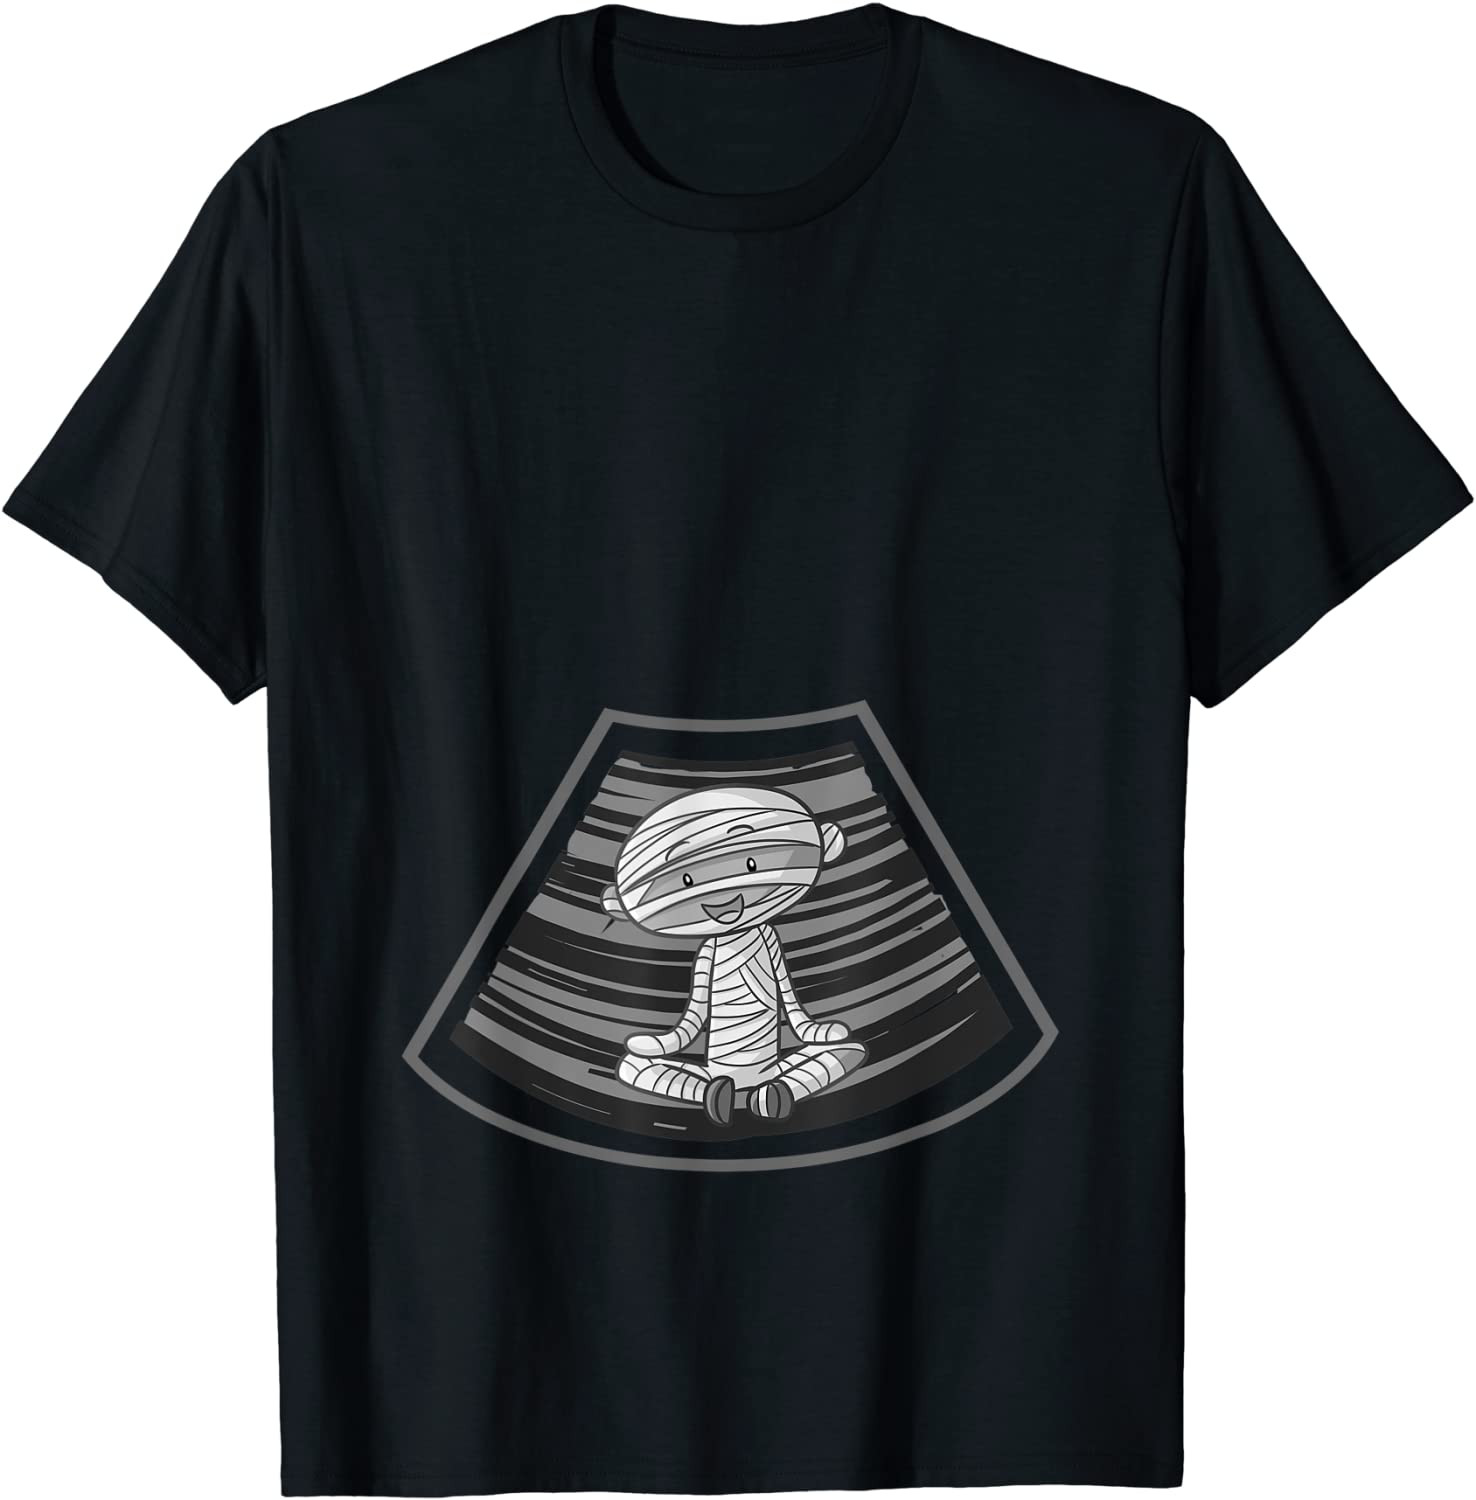 Halloween Pregnant Clothing - Ultrasound Pregnancy Halloween T-Shirt